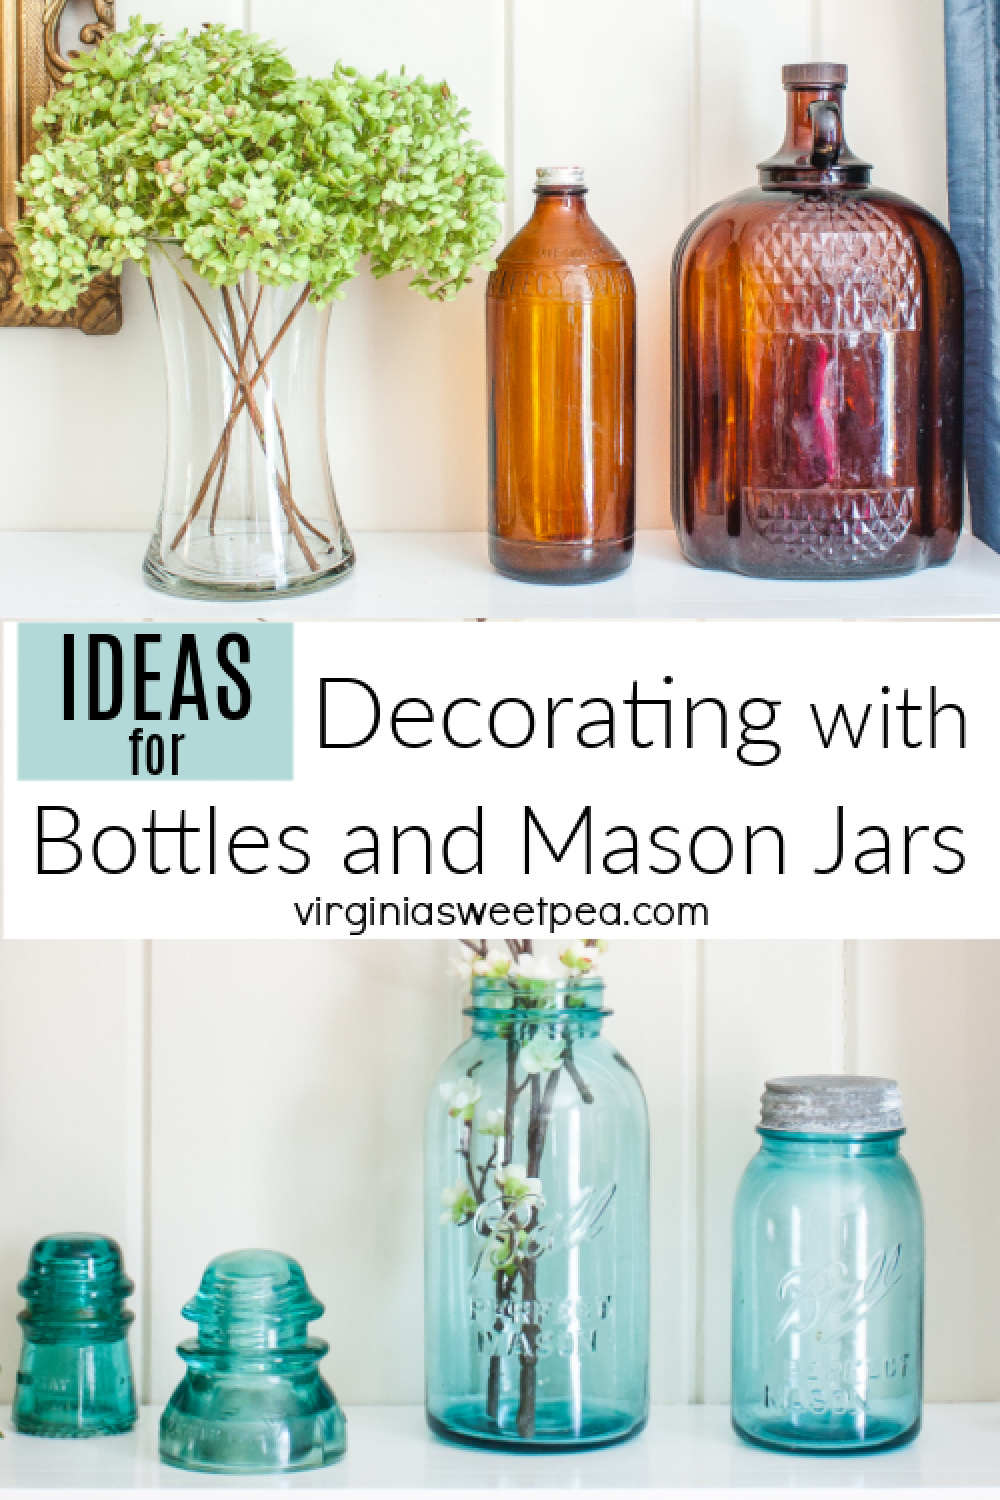 Mason Jar Crafts - Painted Mason Jars, Decor Ideas, and More